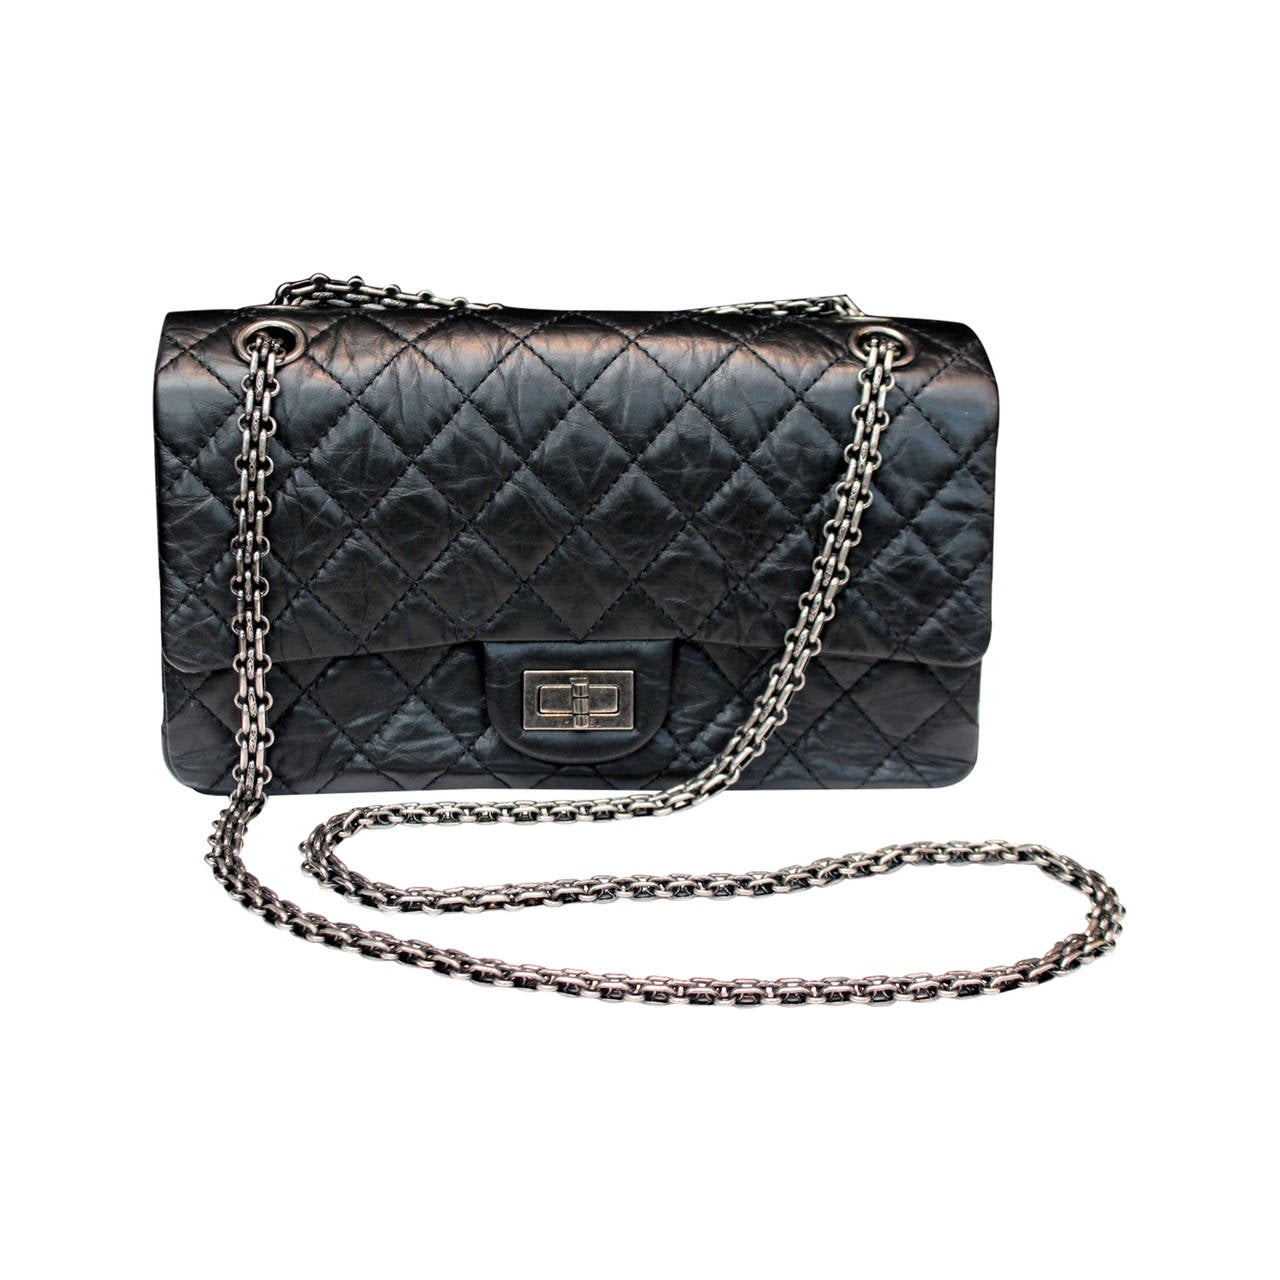 Black Chanel Bag With Gold Chain | semashow.com